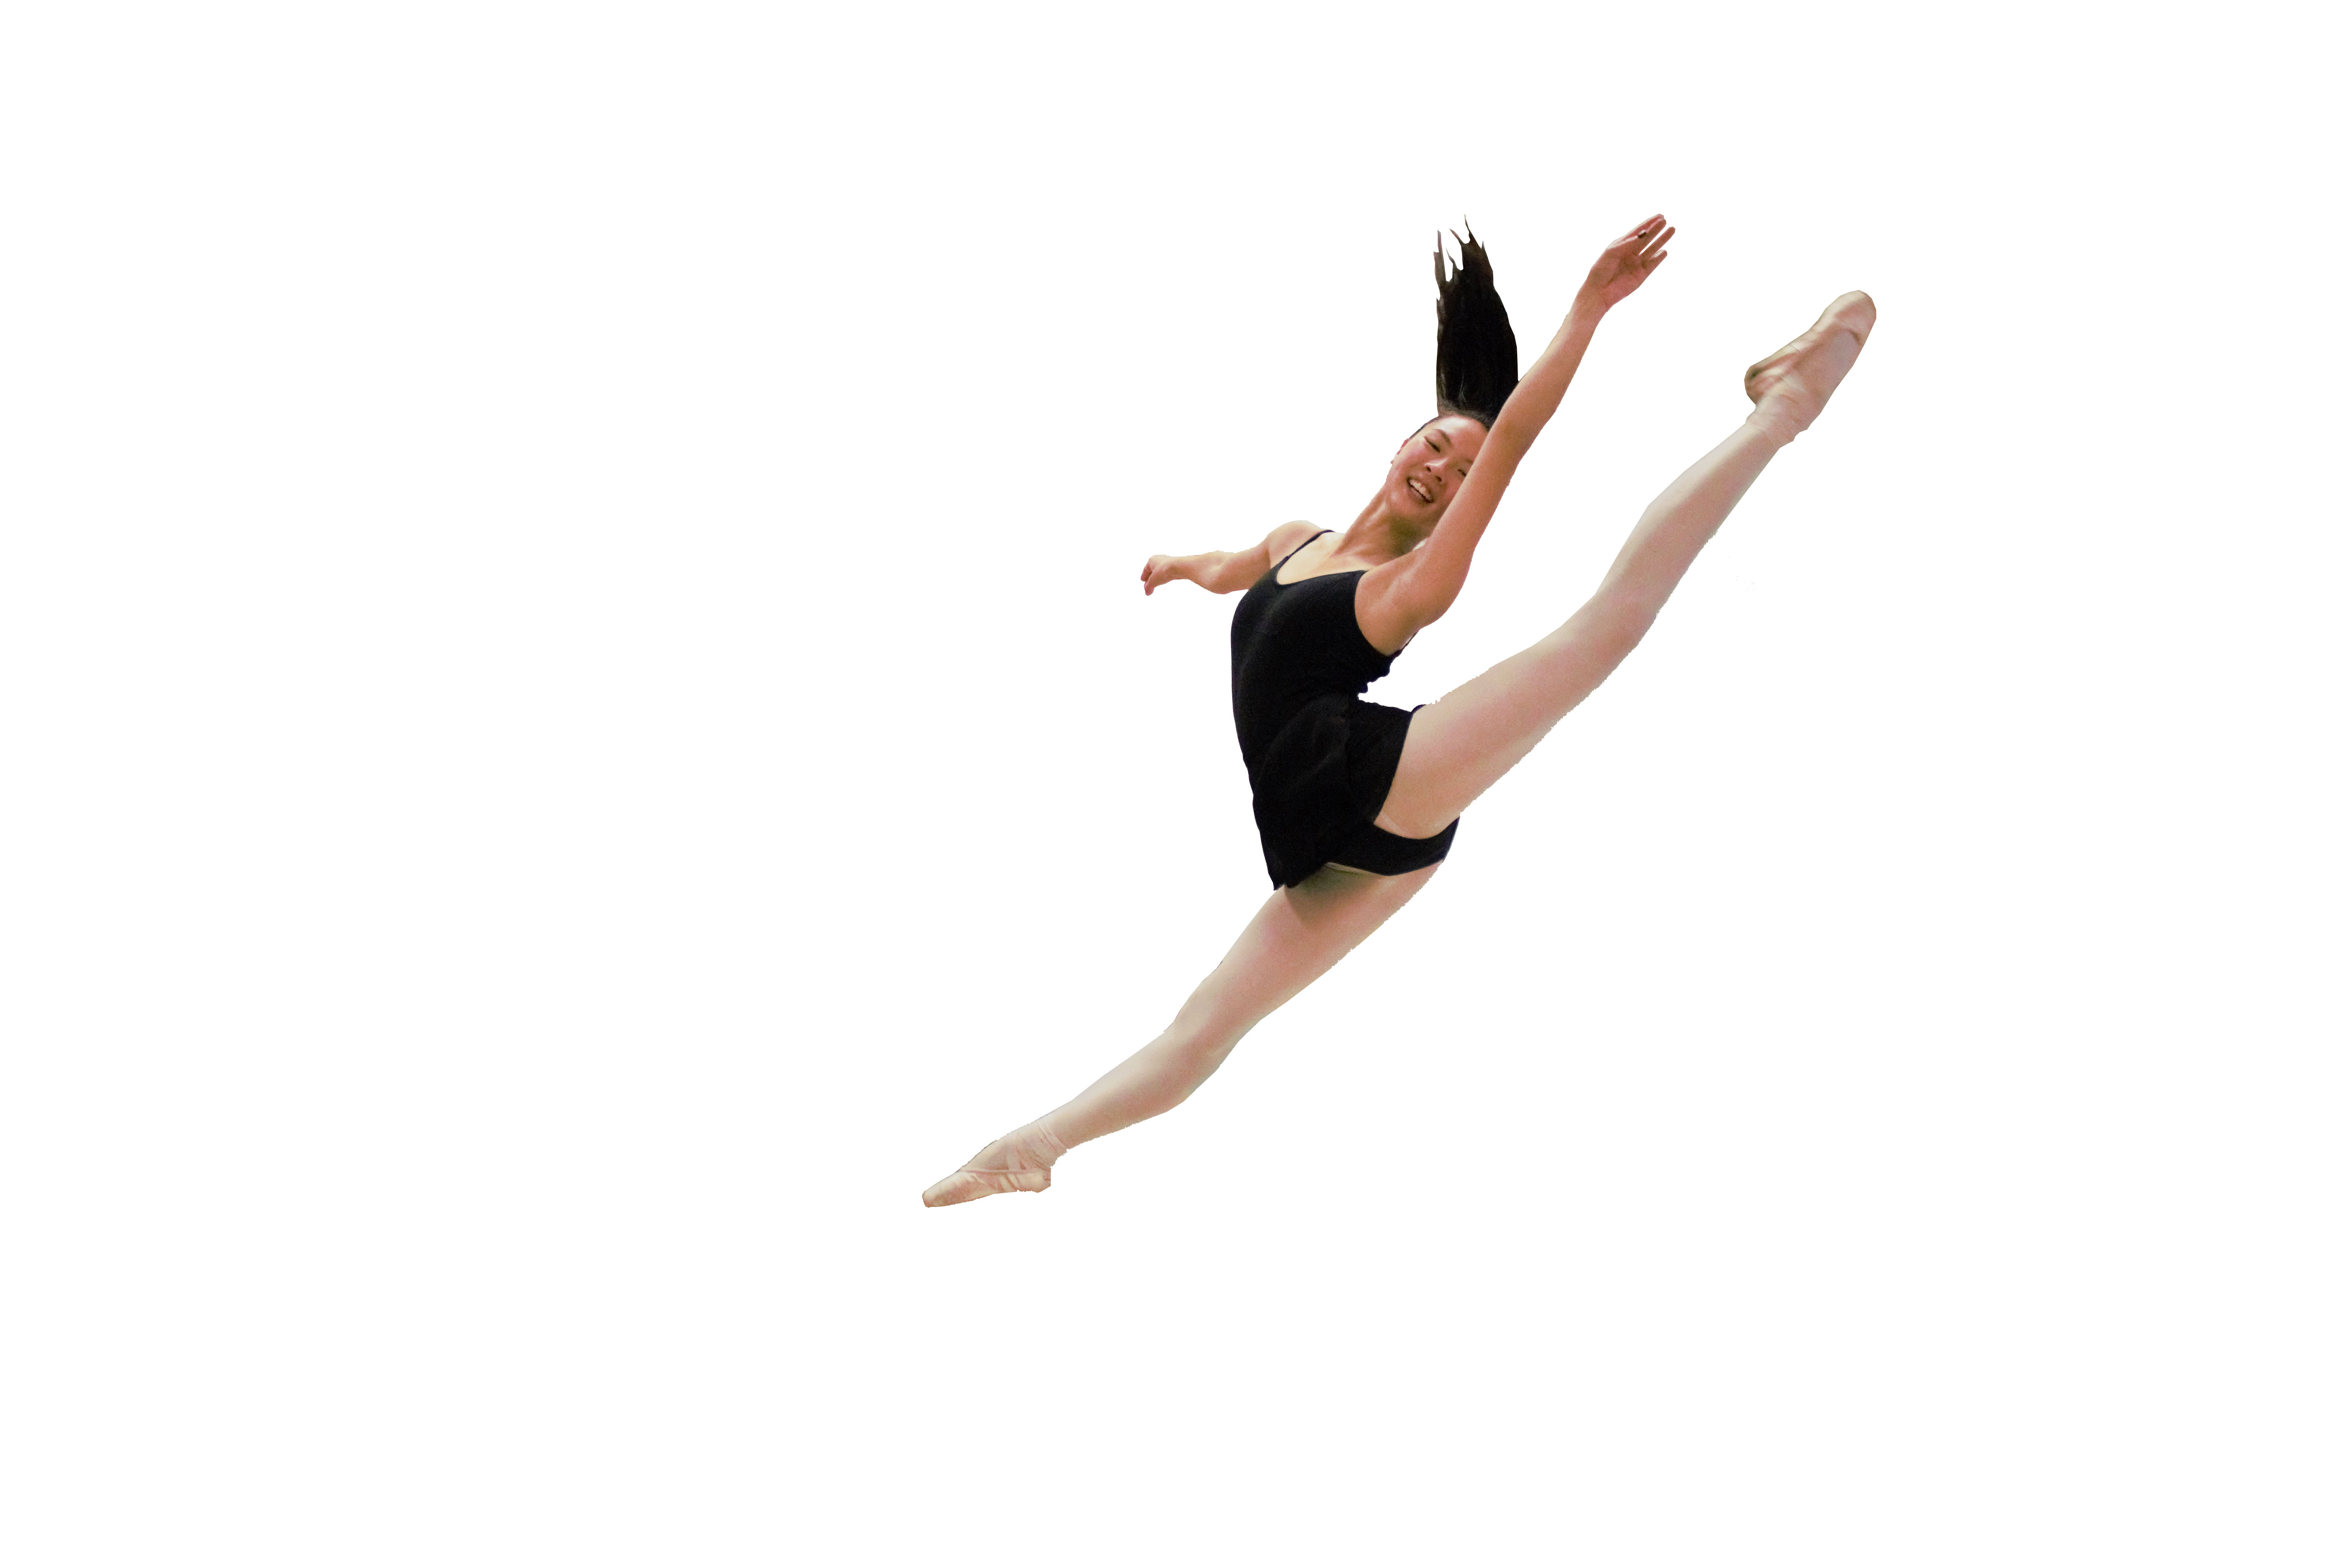 Lee leaps into spotlight with Li’s Ballet Studio